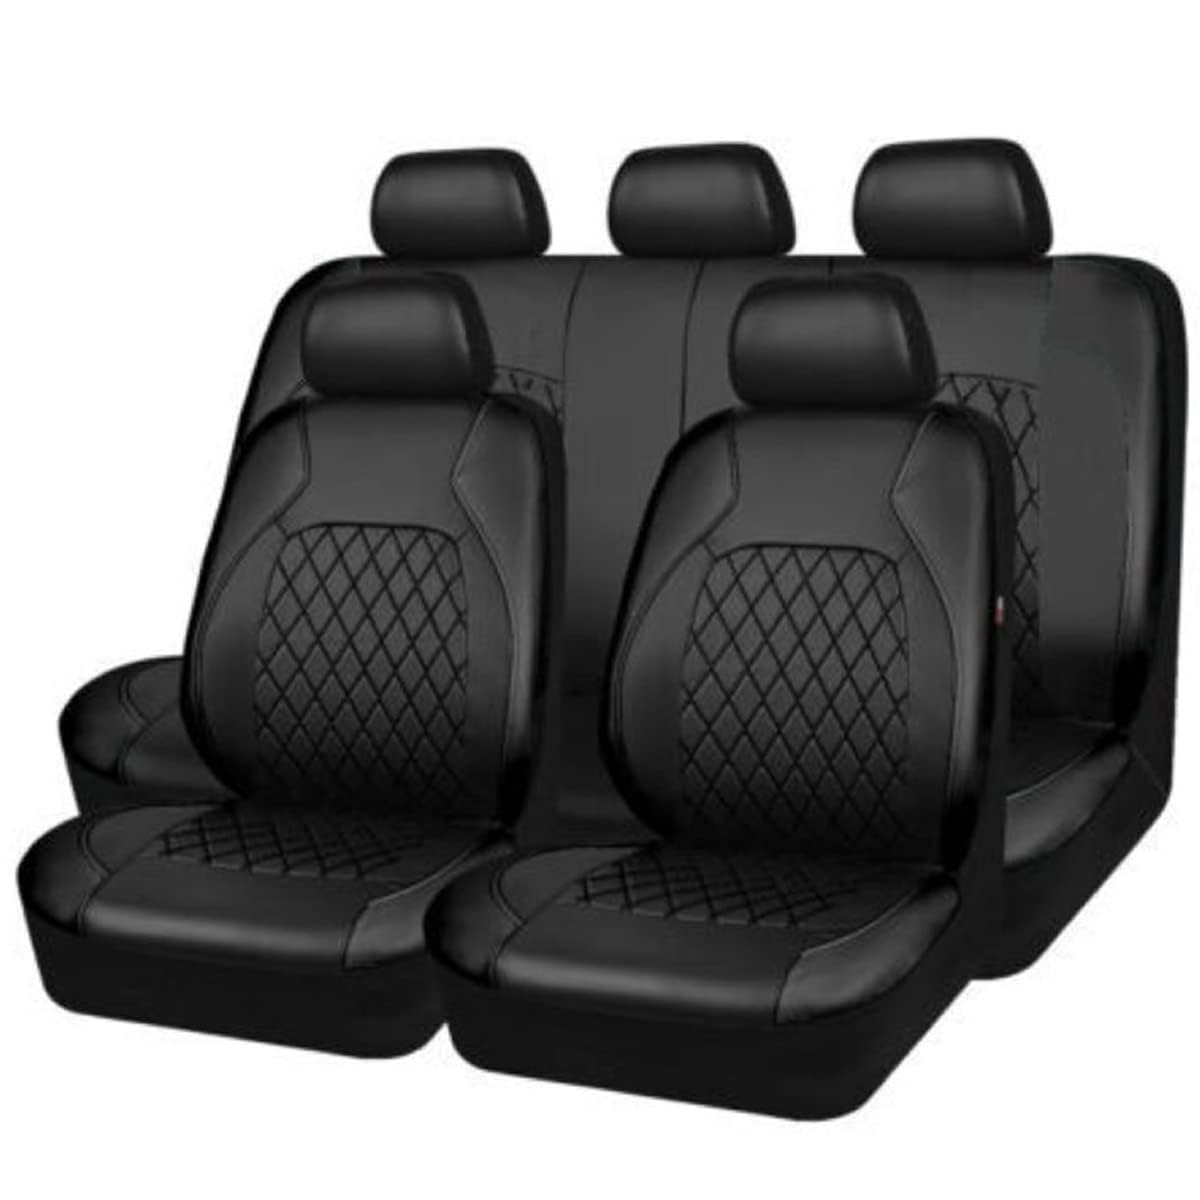 CAALO Auto Leder Sitzschoner Set für Toyota Prius+ 2013-2017,Auto Schonbezug Full Set Leder Sitzbezug Vordersitze Rücksitzschoner Auto Zubehör,A-Black von CAALO